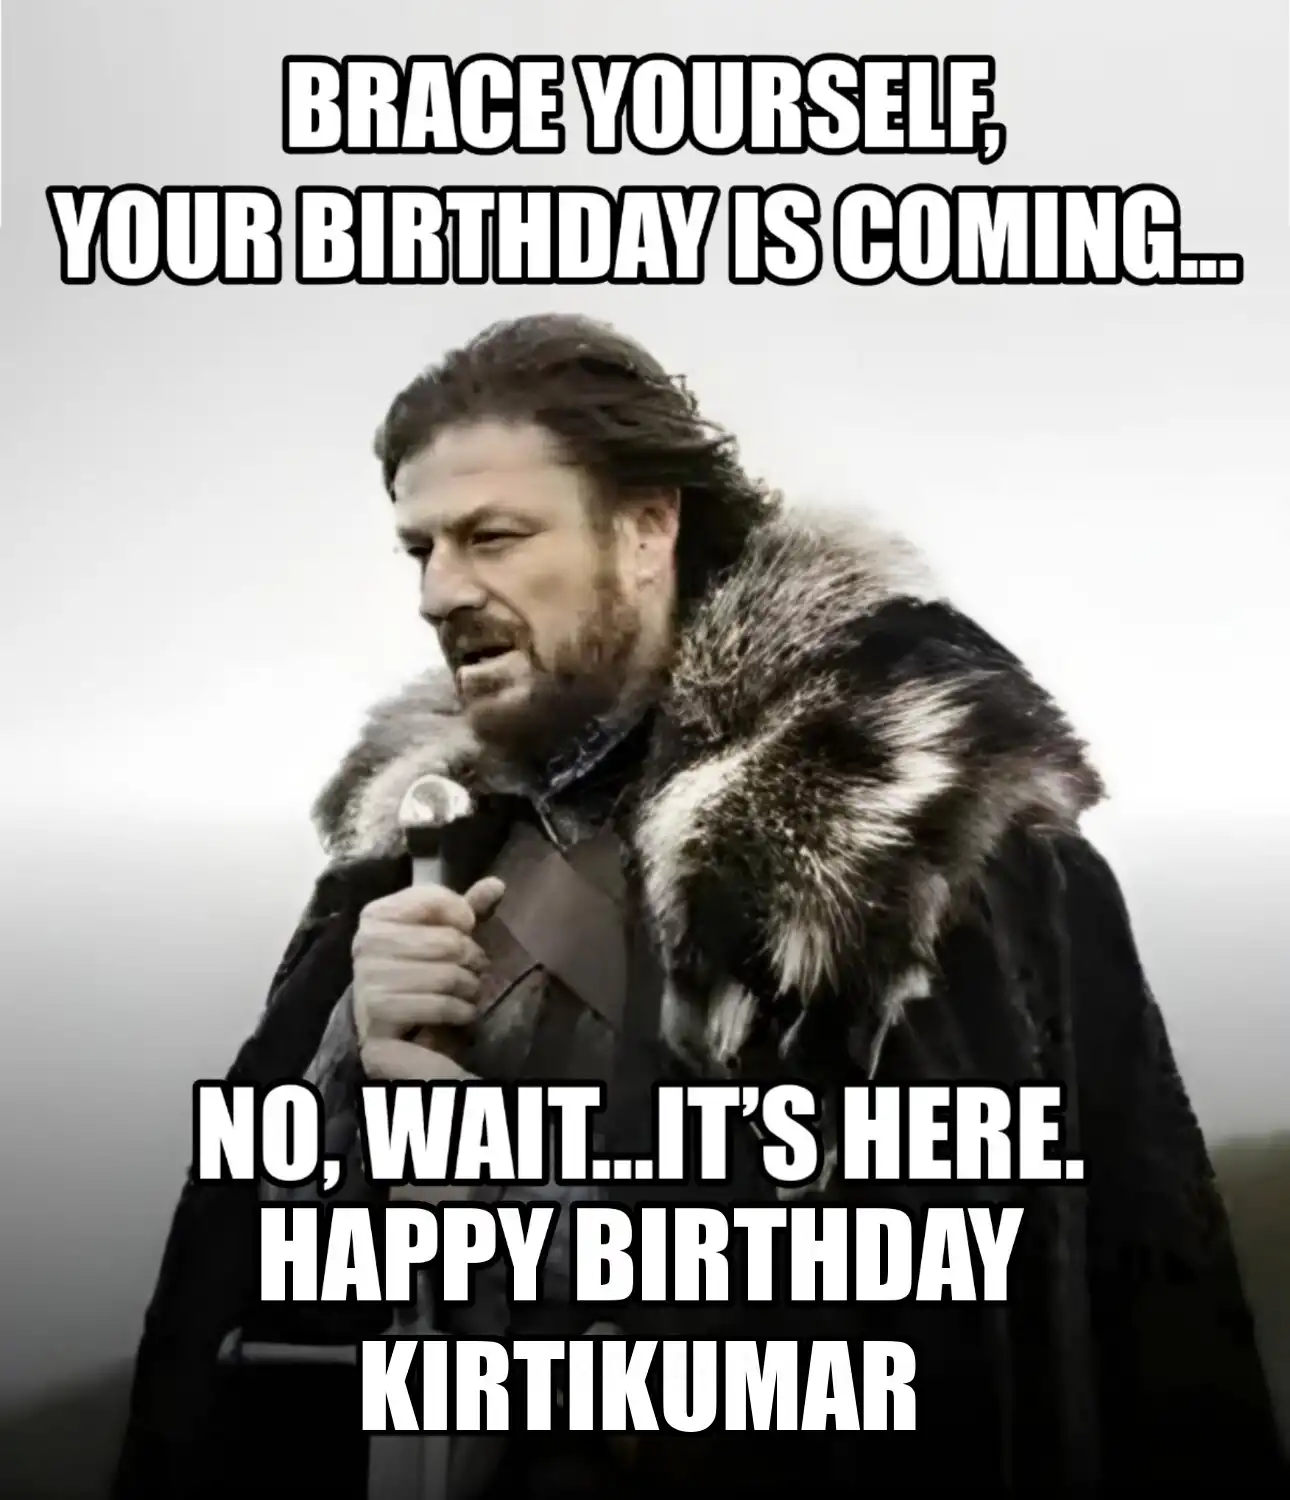 Happy Birthday Kirtikumar Brace Yourself Your Birthday Is Coming Meme